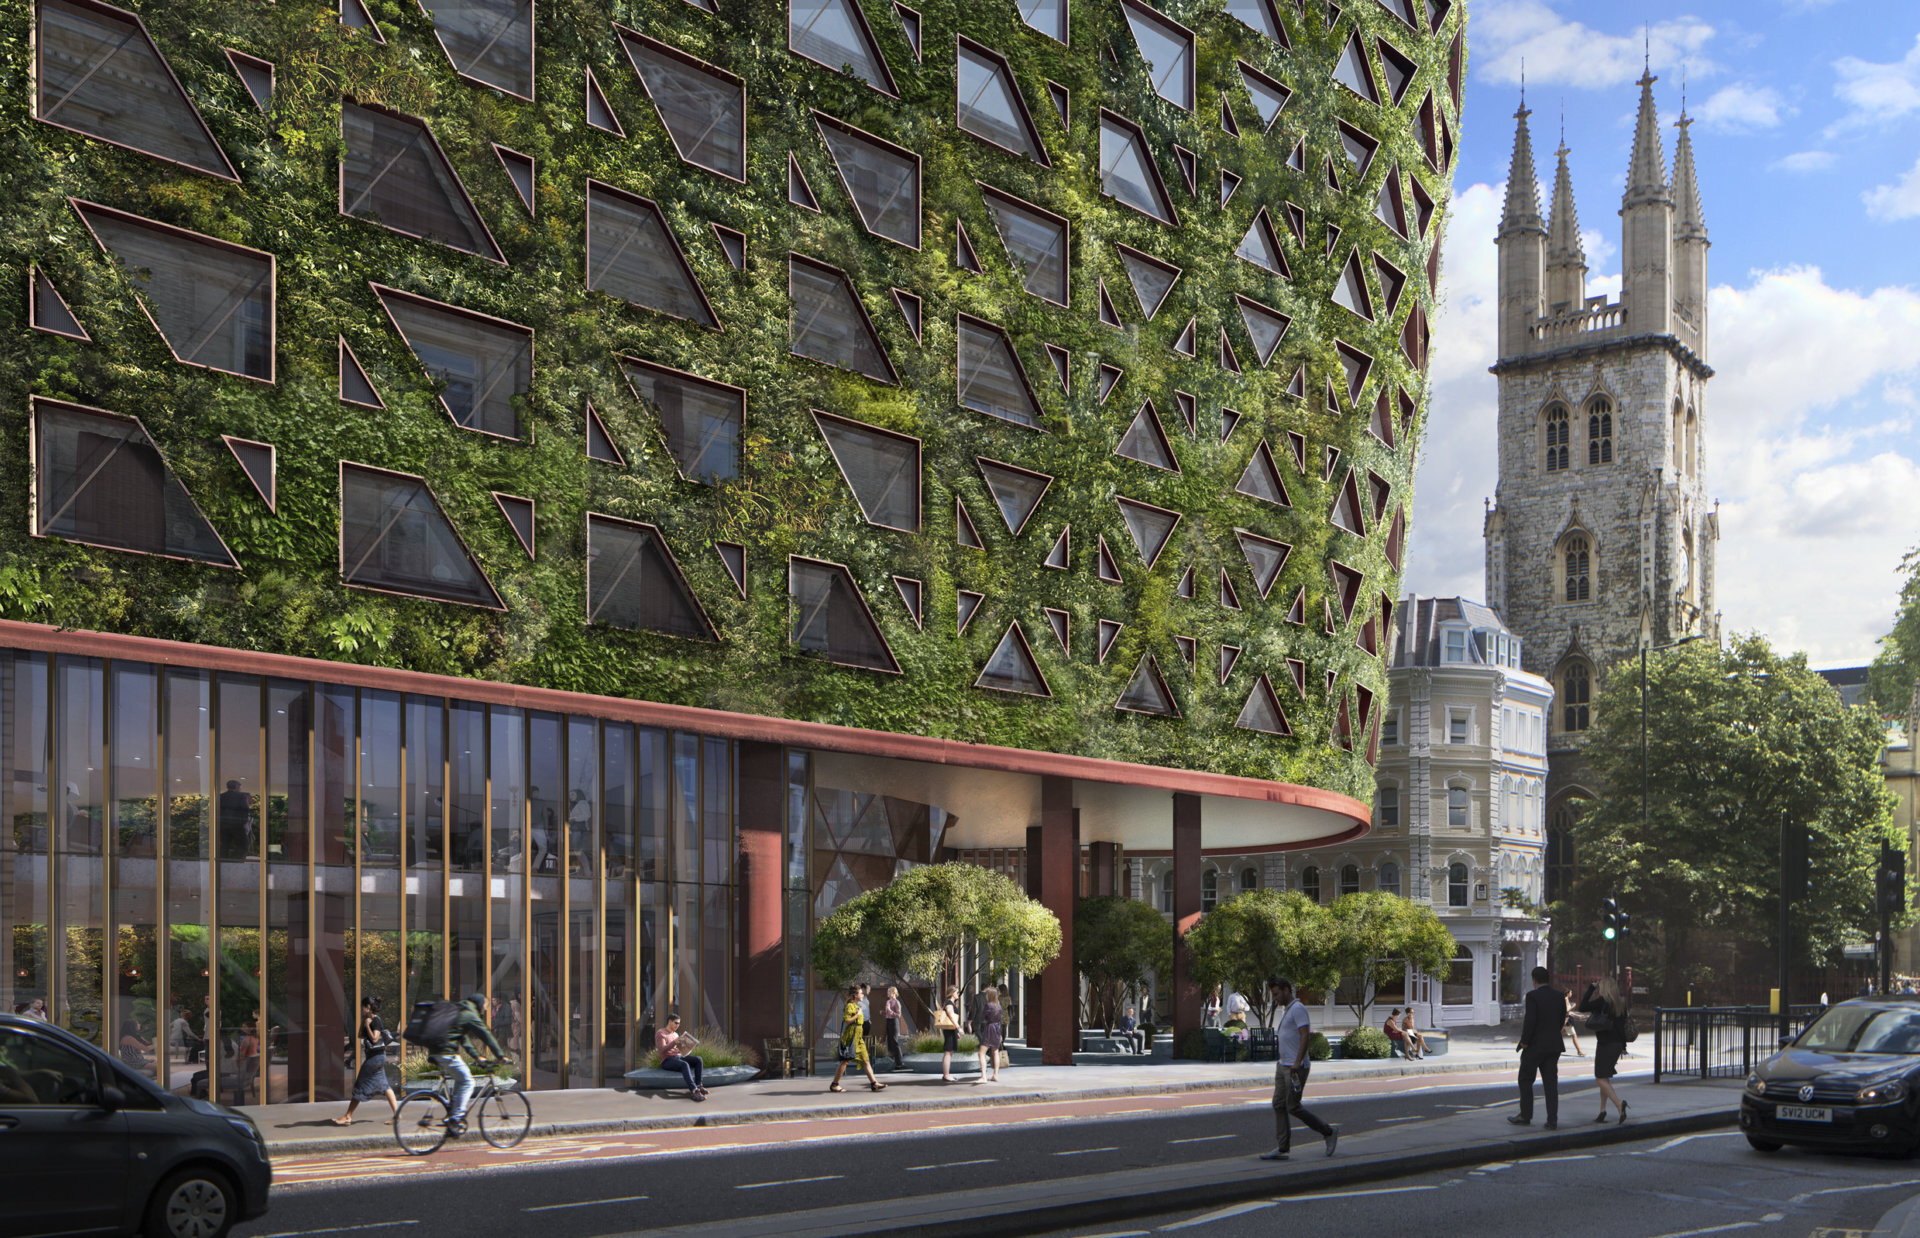 More information about "Πάνω από 400.000 φυτά θα συνθέσουν στο Λονδίνο τον πιο οικολογικό τοίχο ολόκληρης της Ευρώπης"